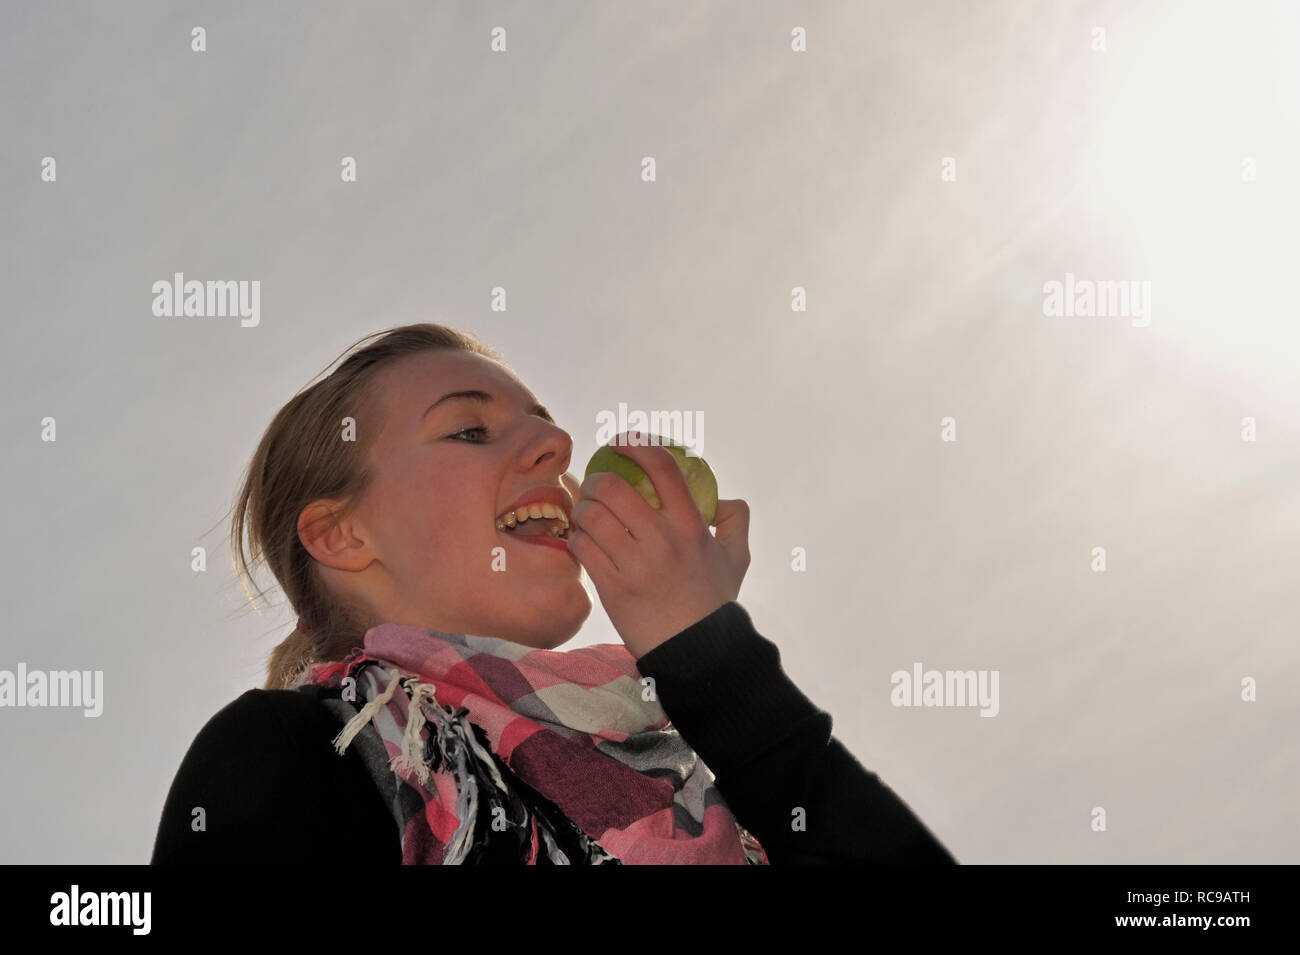 Junge Frau beisst in einen grünen Apfel - in den sauren Apfel beissen | jeune femme mange une pomme verte - d'avaler une pilule amère ou de saisir l'natt Banque D'Images